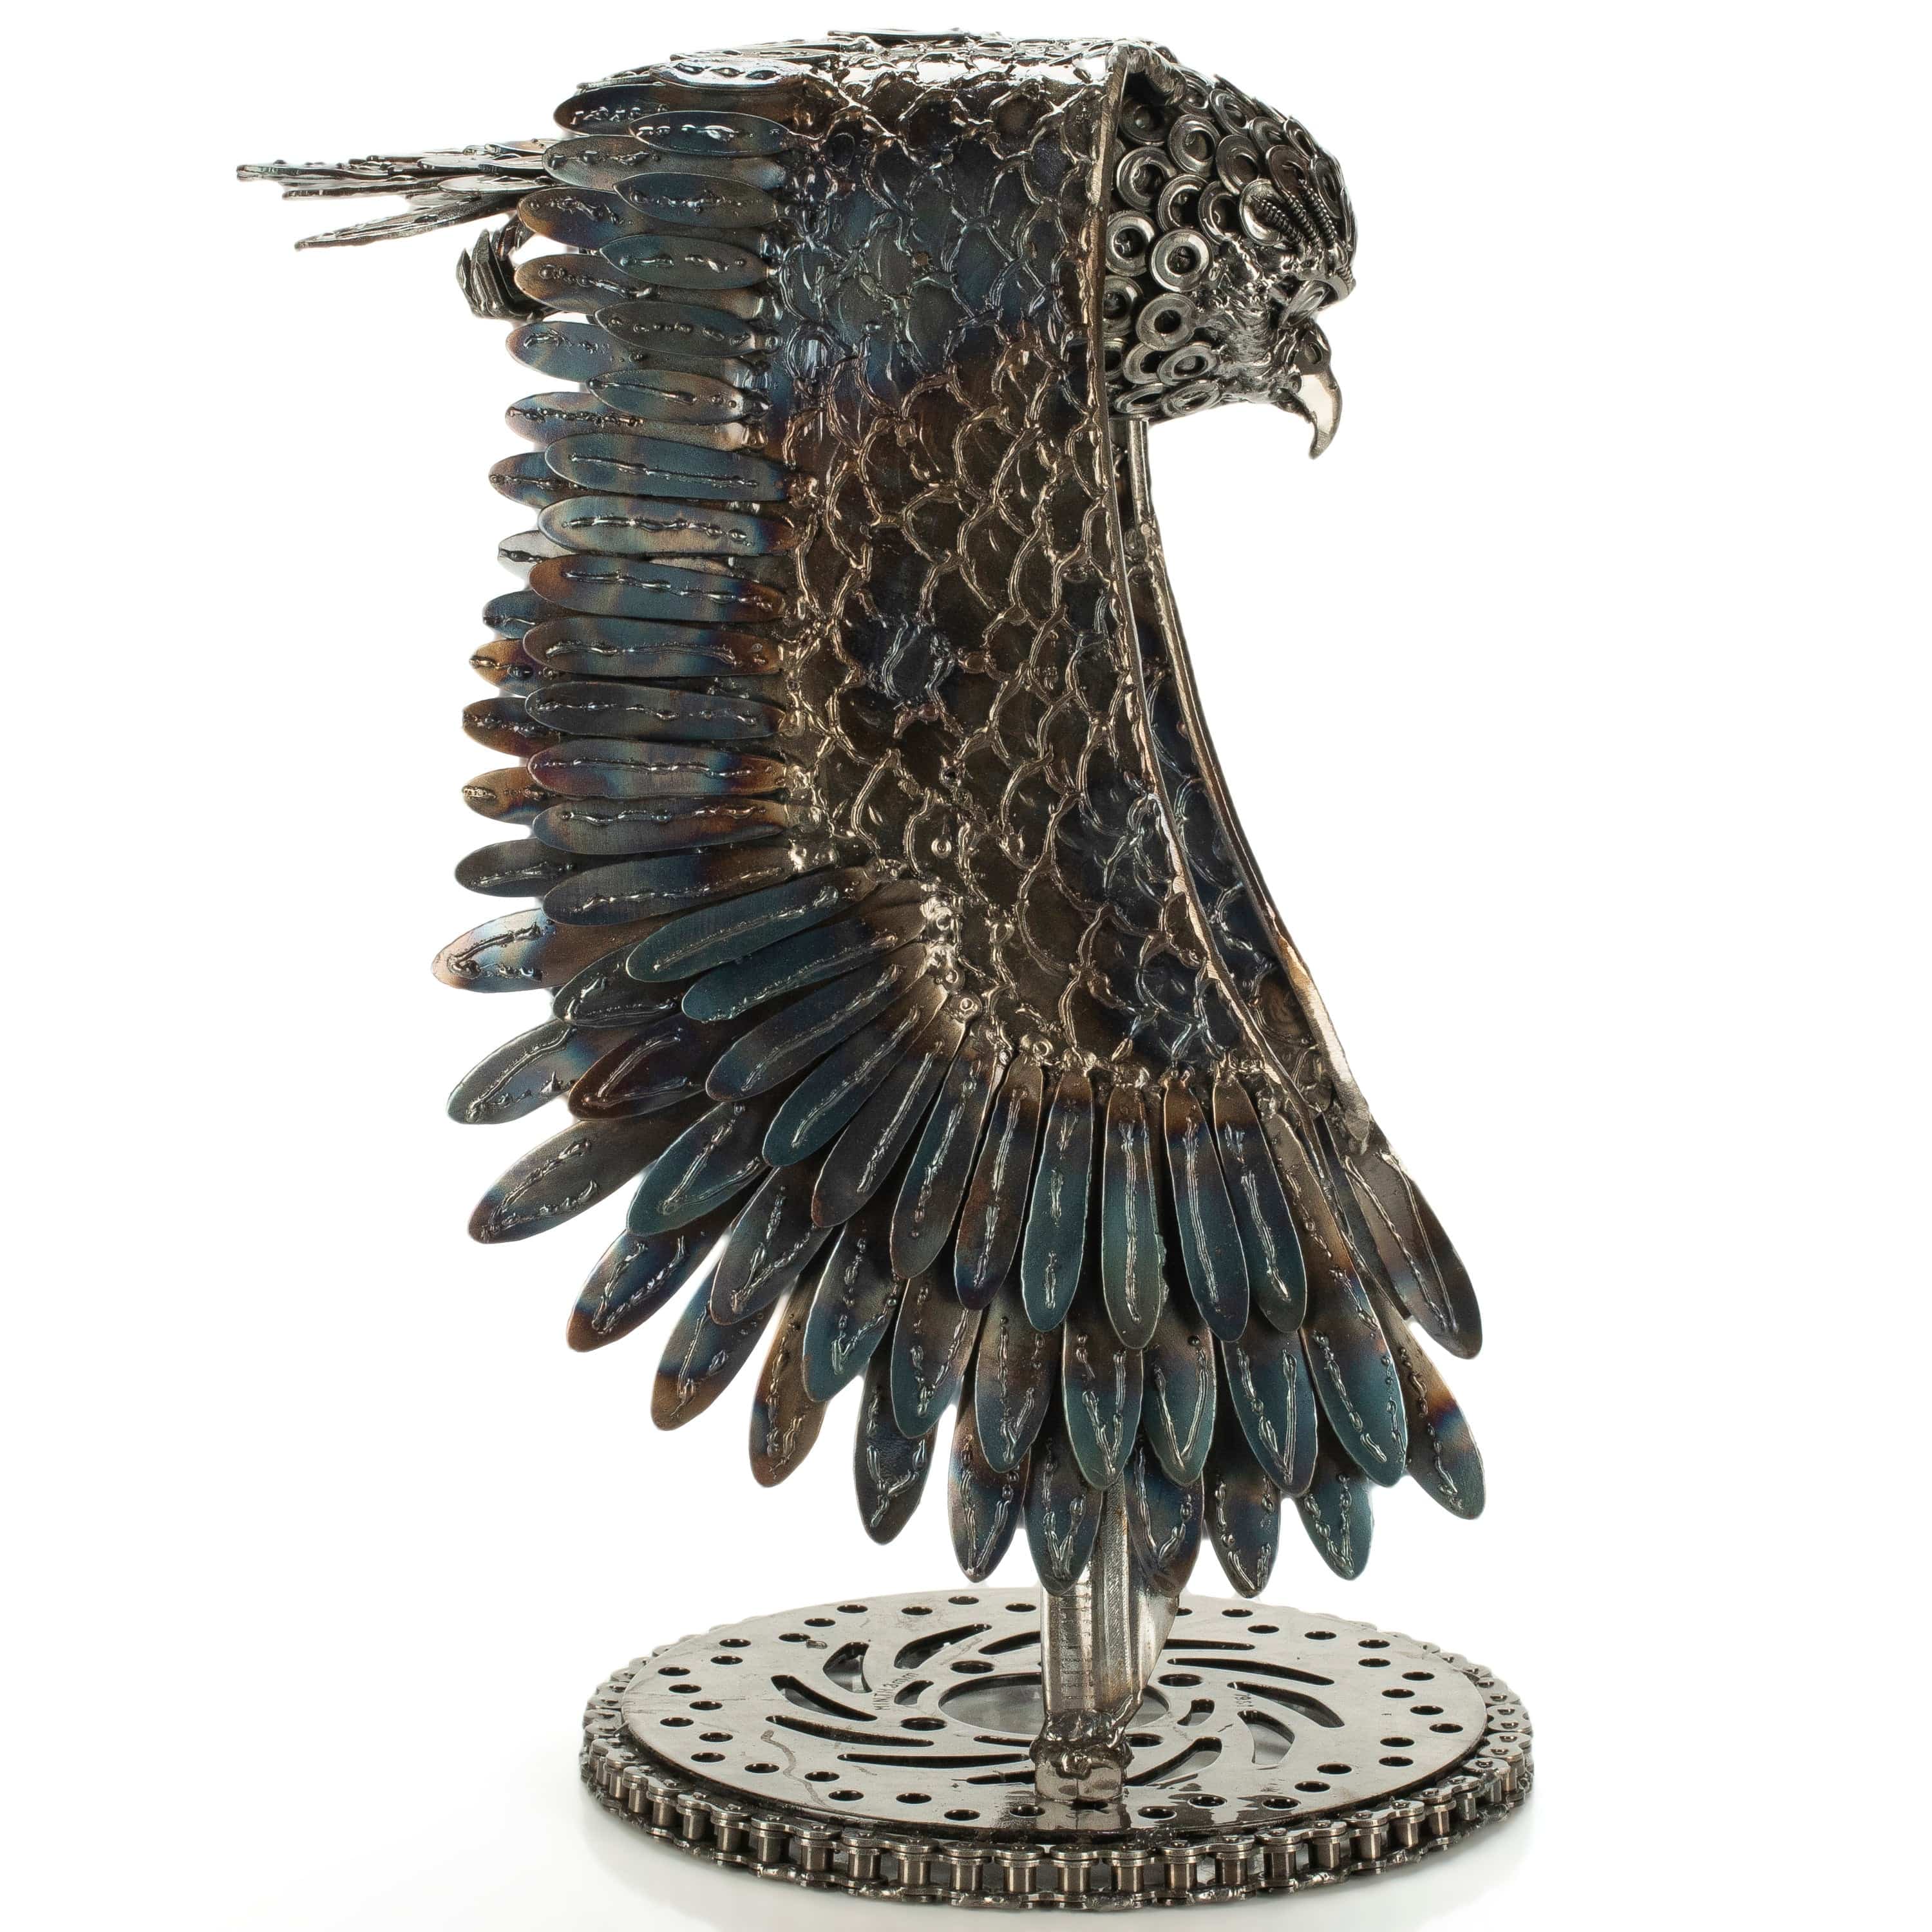 KALIFANO Recycled Metal Art 18" Owl Inspired Recycled Metal Art Sculpture RMS-OWL30x45-PK